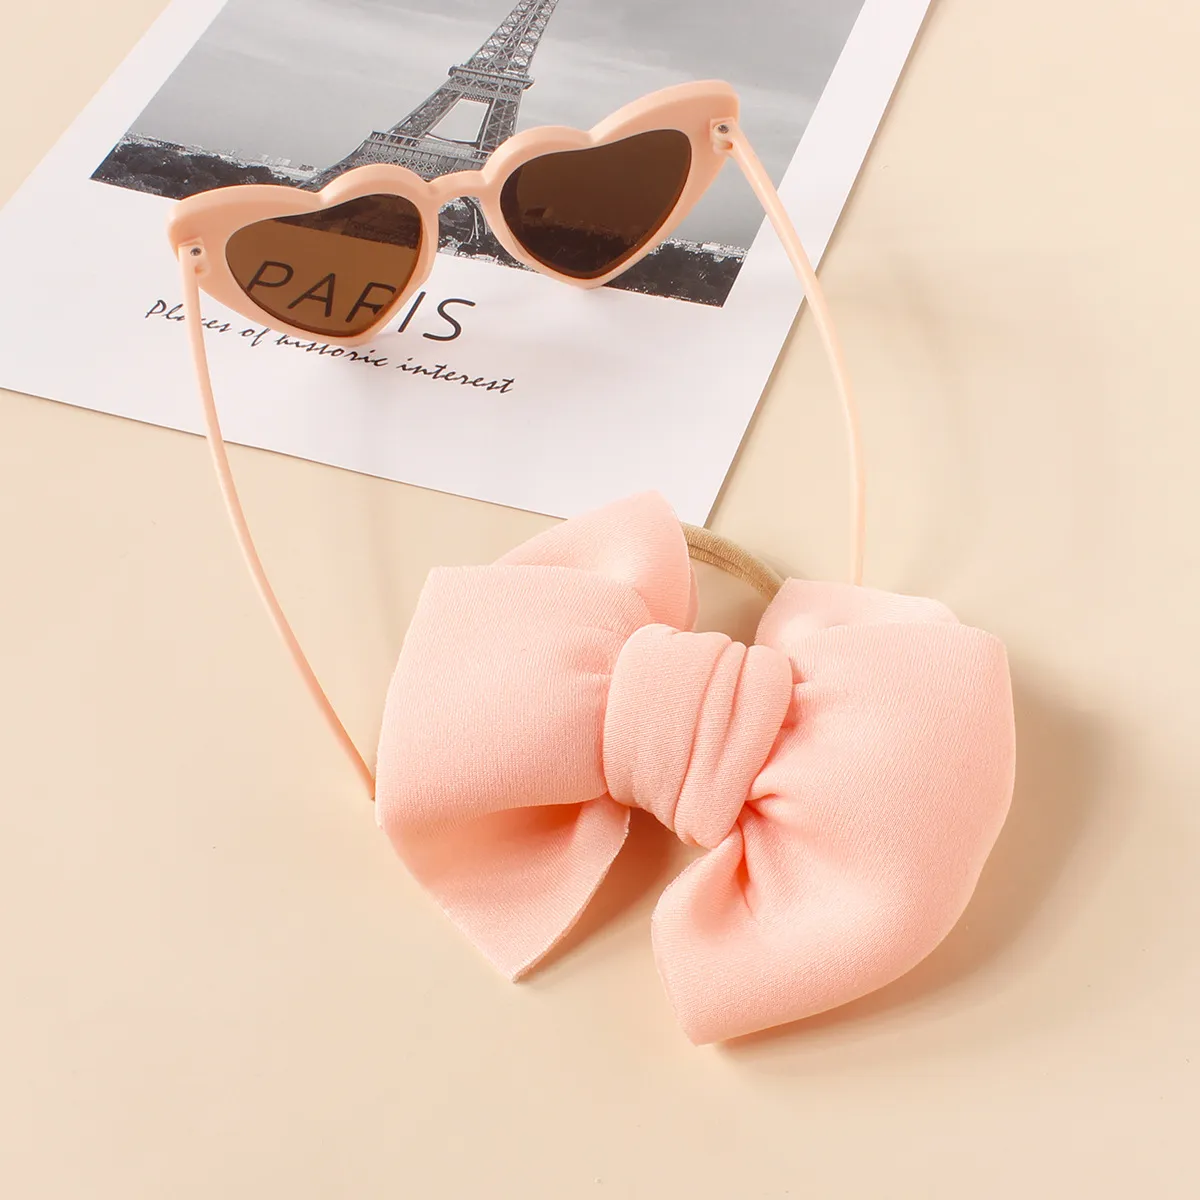 2pcs Baby/Toddler Girl Bowknot Super Soft Nylon Headband with Heart-shaped Sunglasses Set Light Pink big image 1